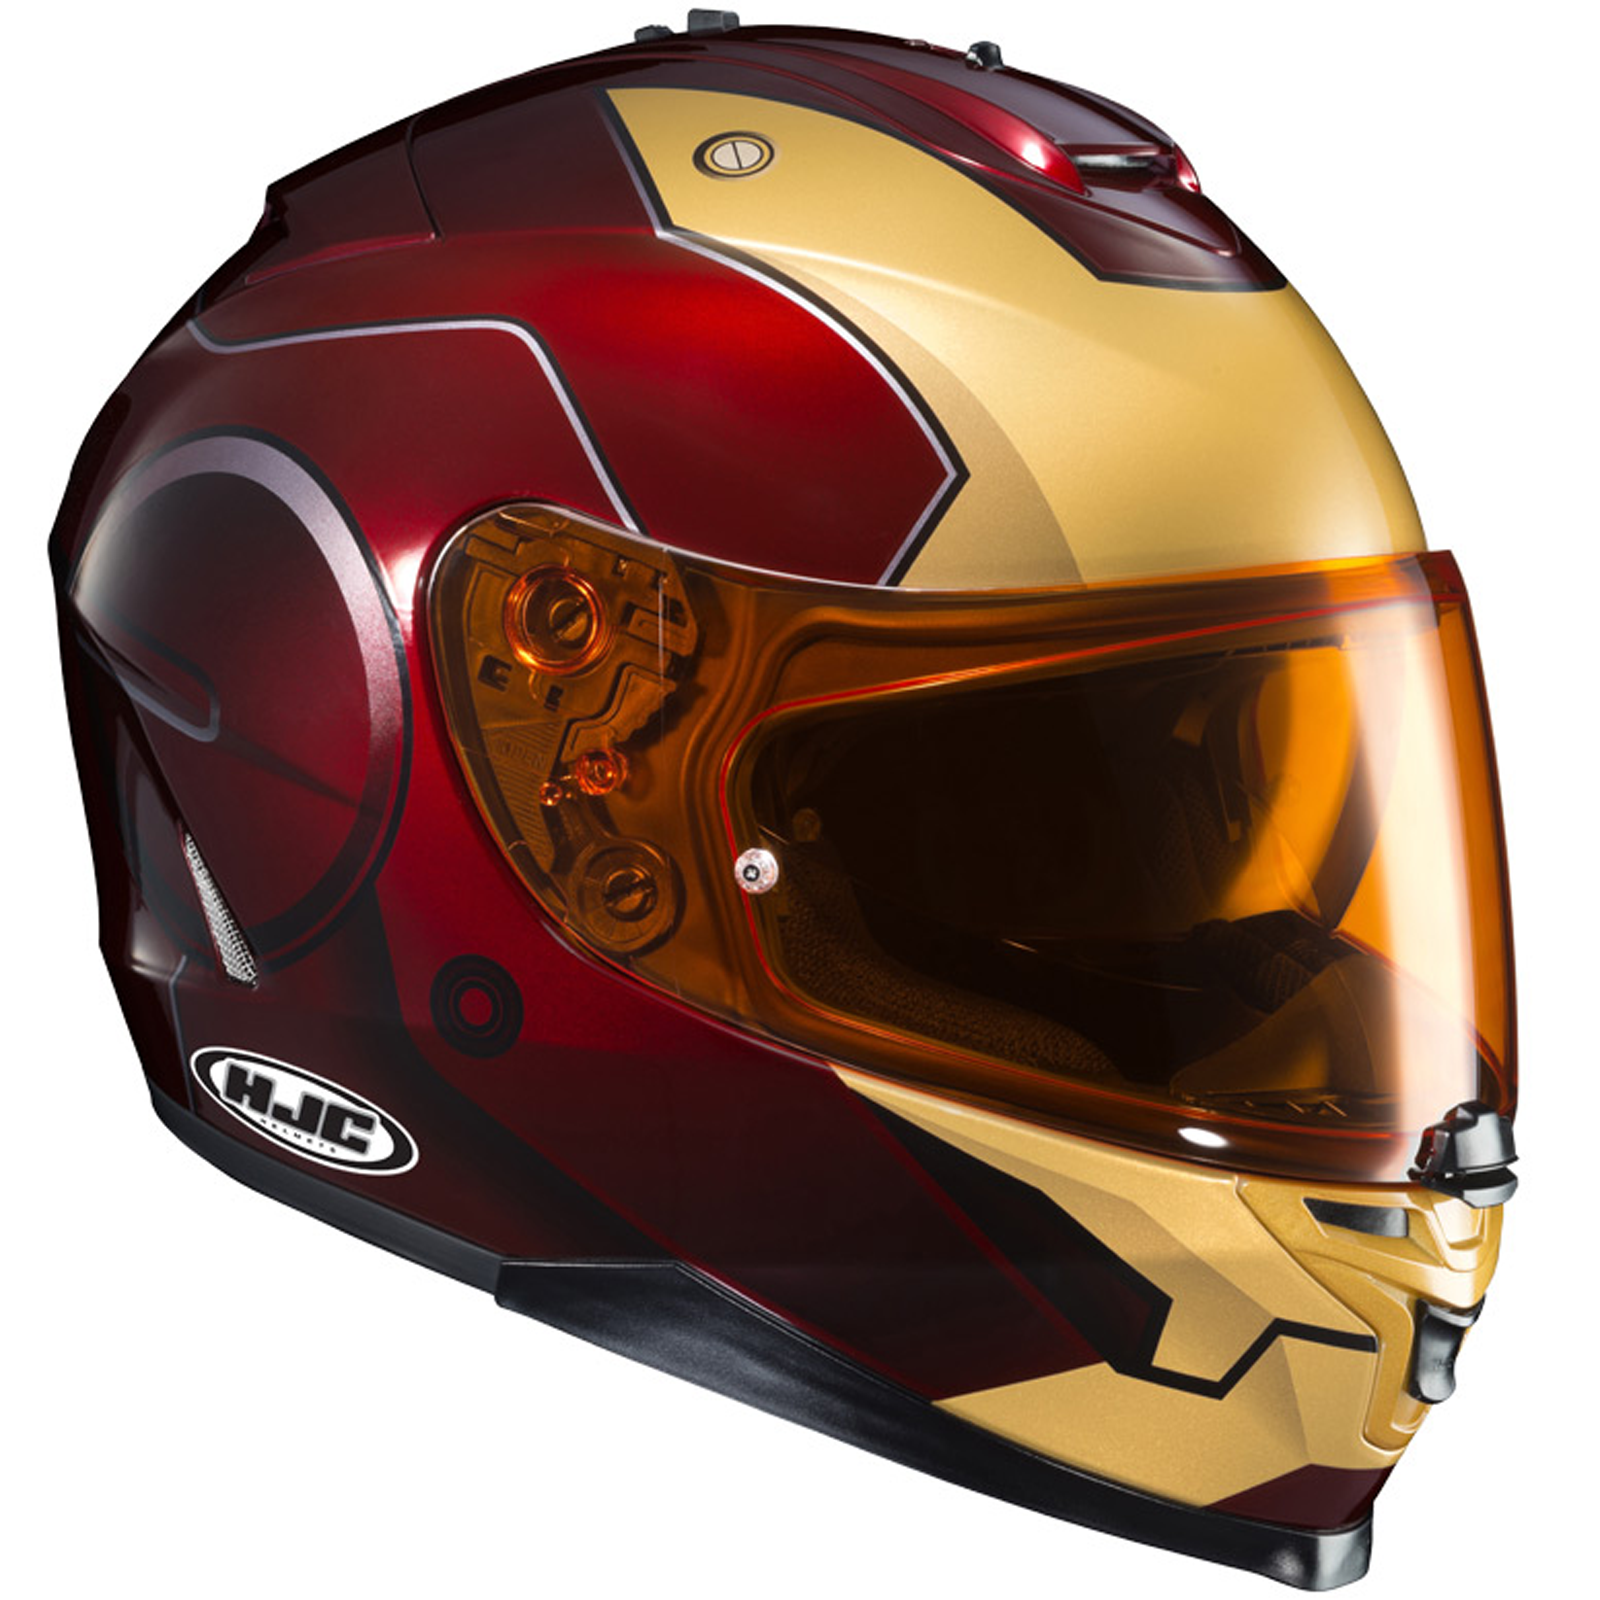 ironman motorcycle helmet